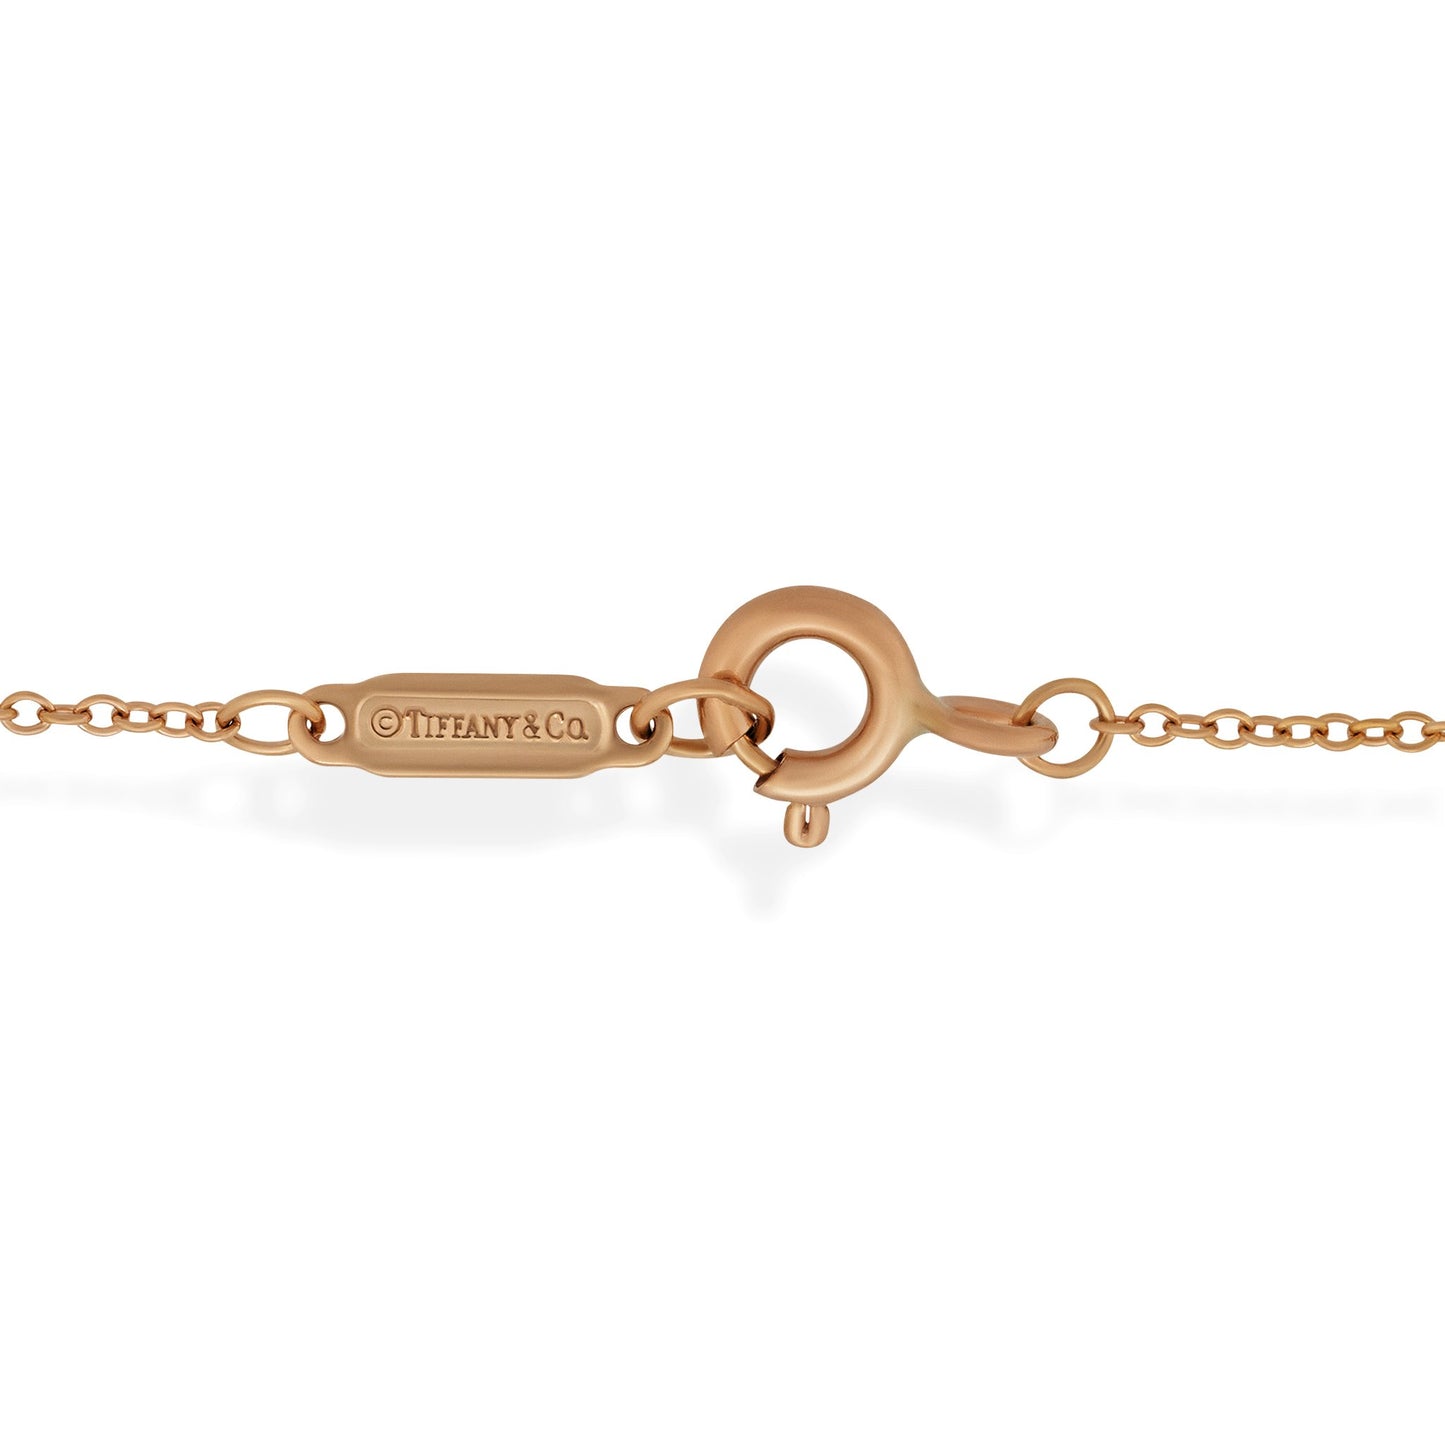 Tiffany & Co. 18K Rose Gold Lock Heart Pendant Necklace Length: 16"